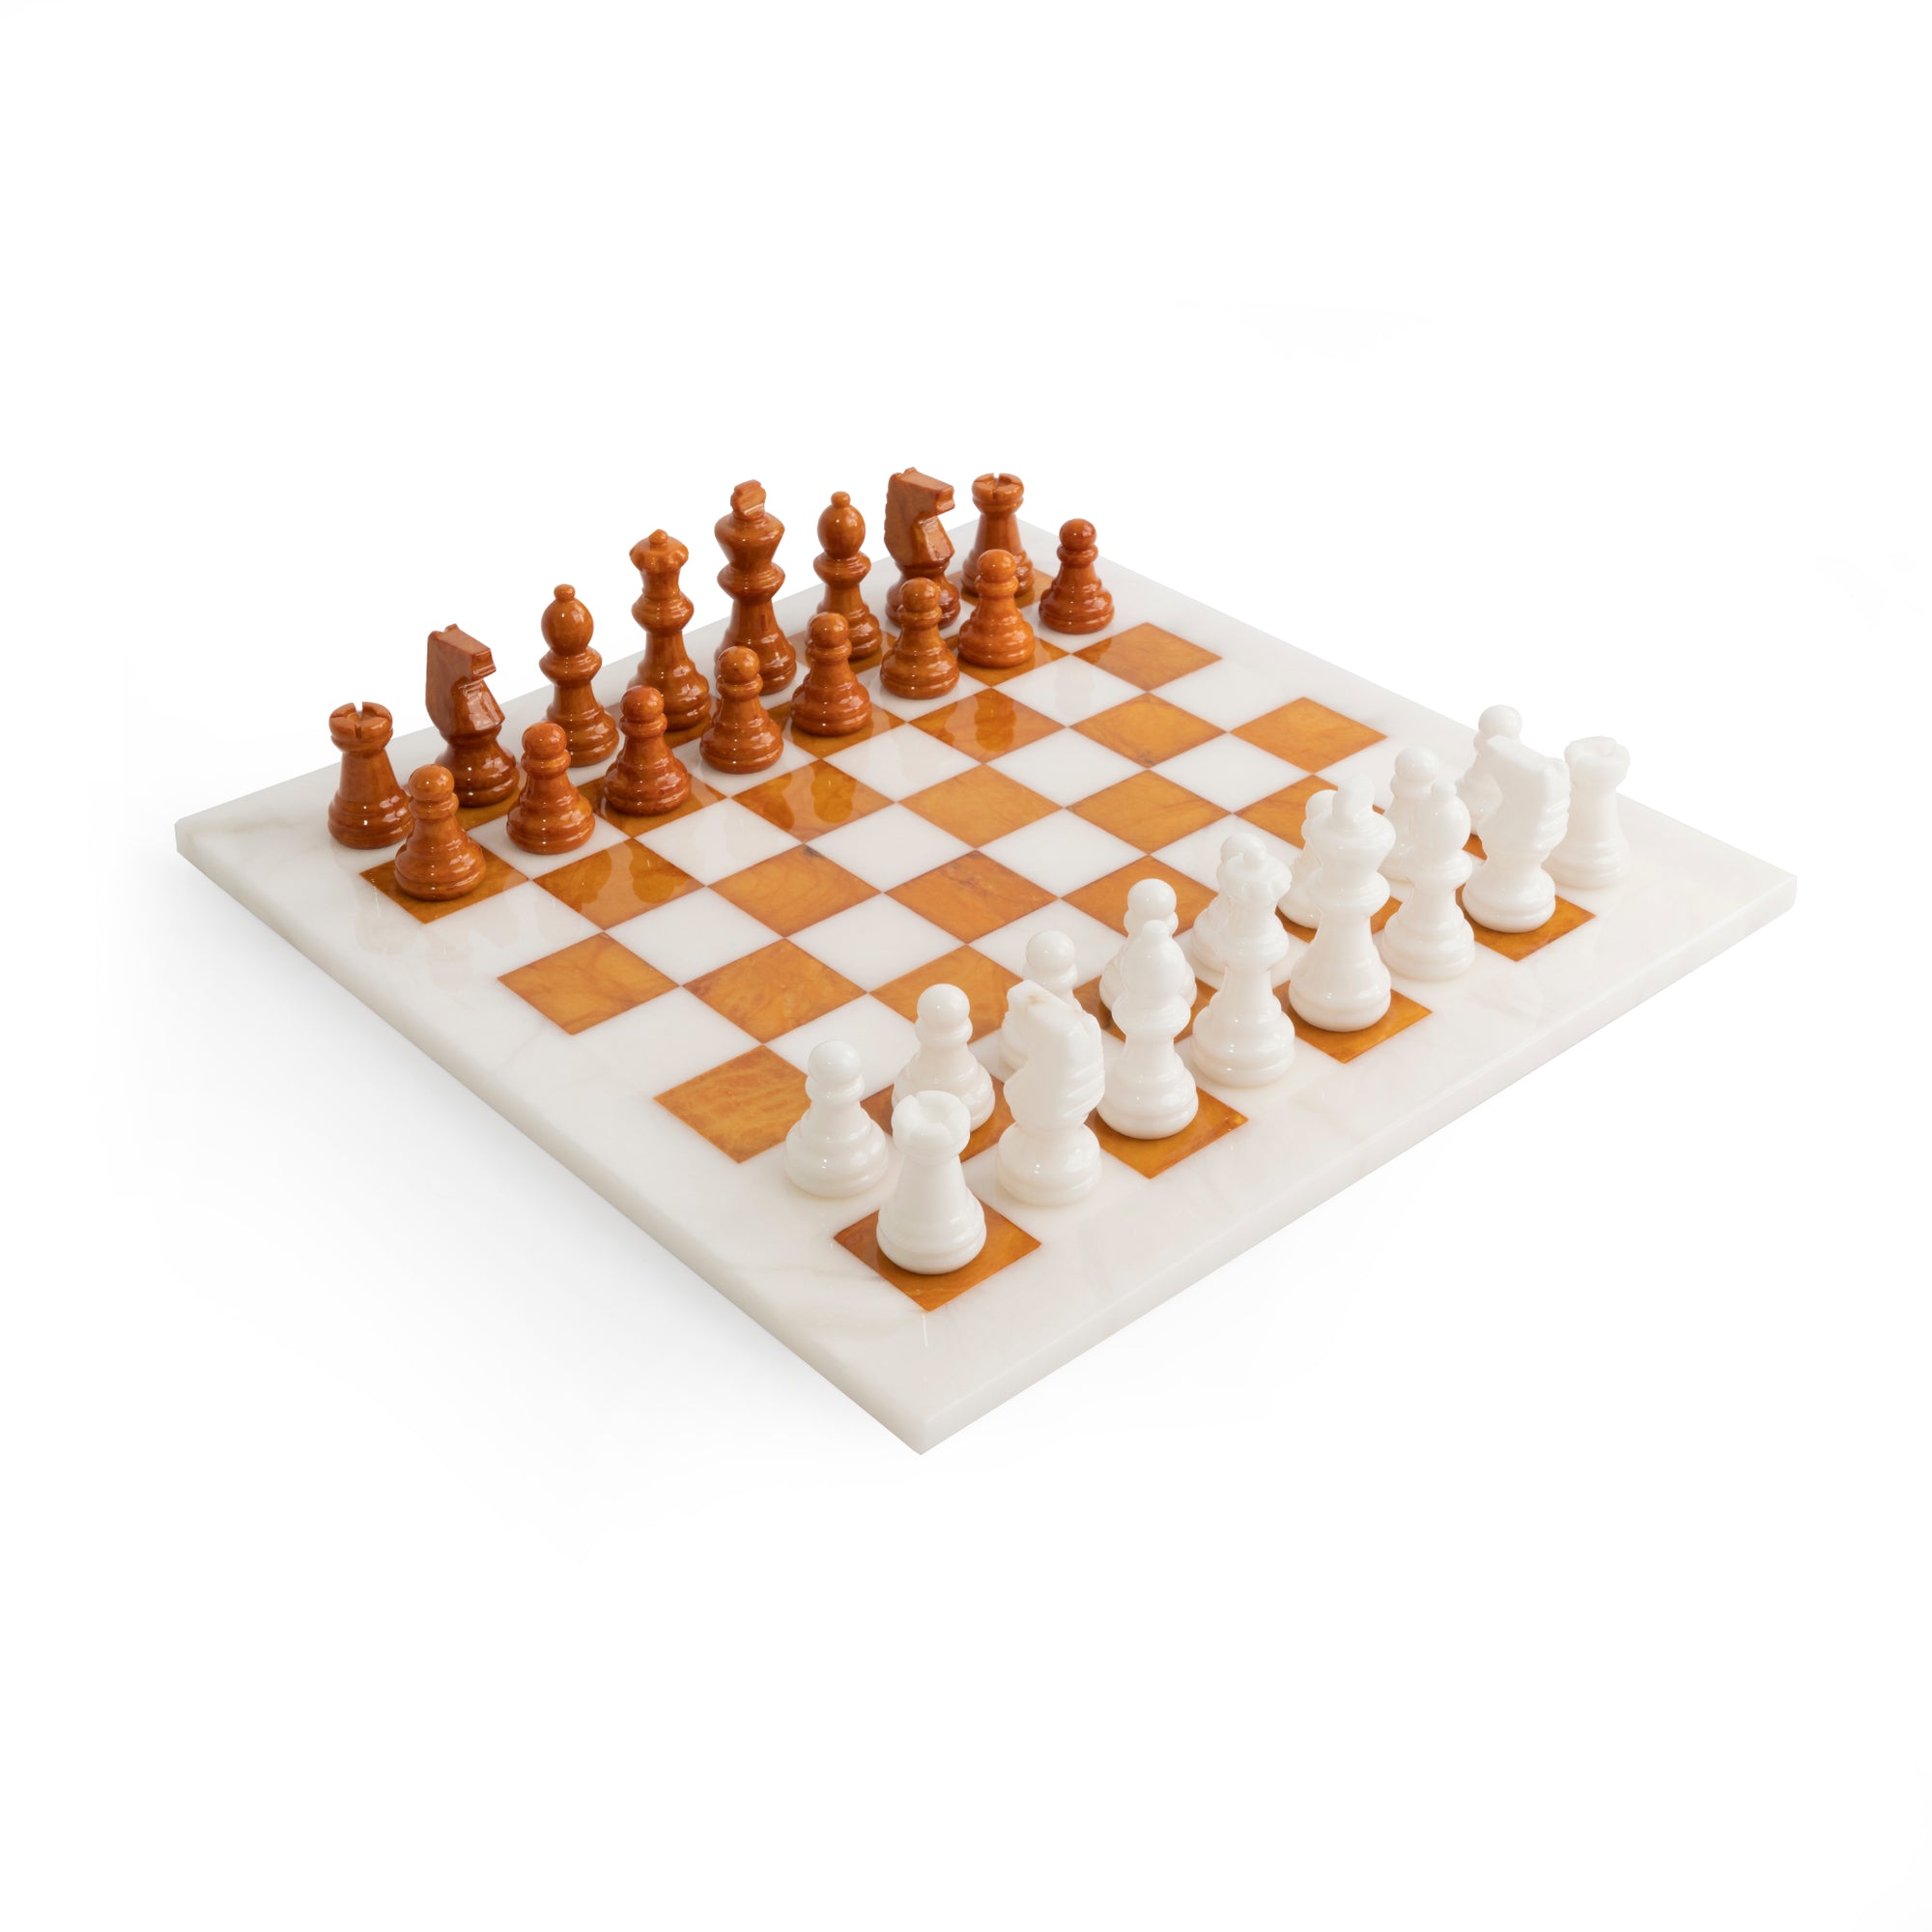 Scali-alabastro-14MF1-Bianco-Bruno-alabaster-white-brown-marble-stone-quality-chess-set-australia-italian-italy-hand-made-hero-white.jpg